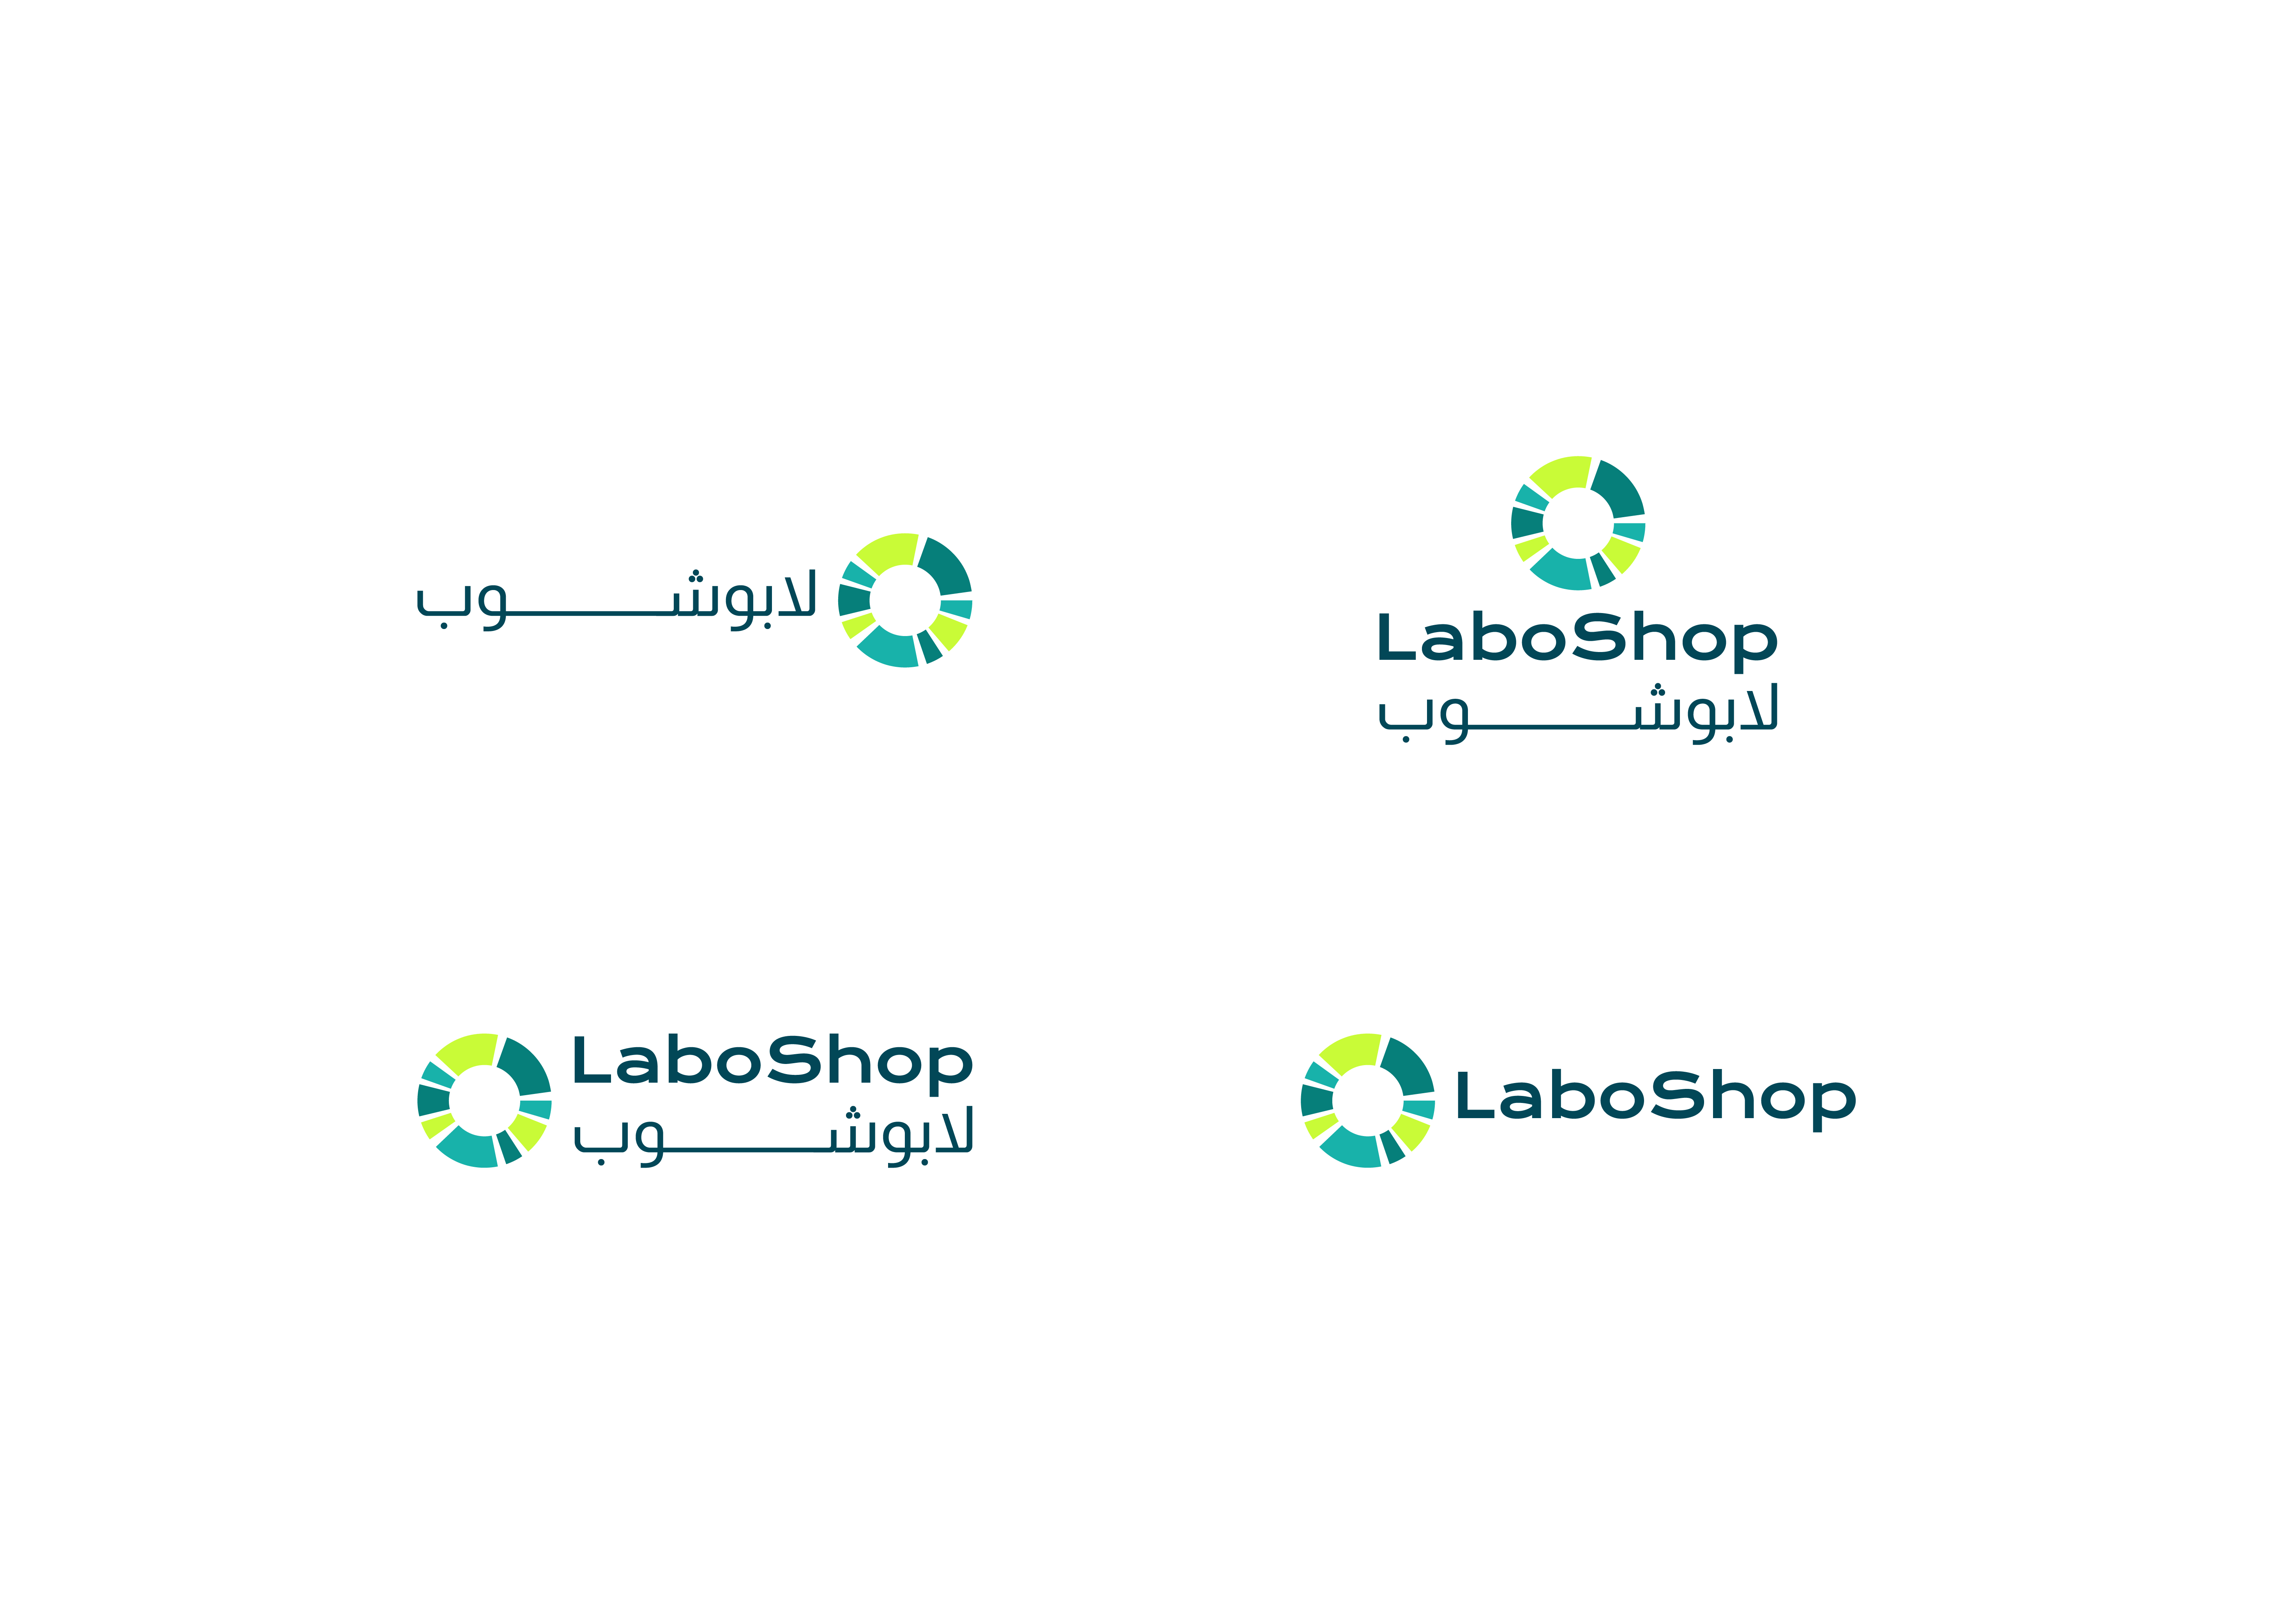 LaboShop, Products